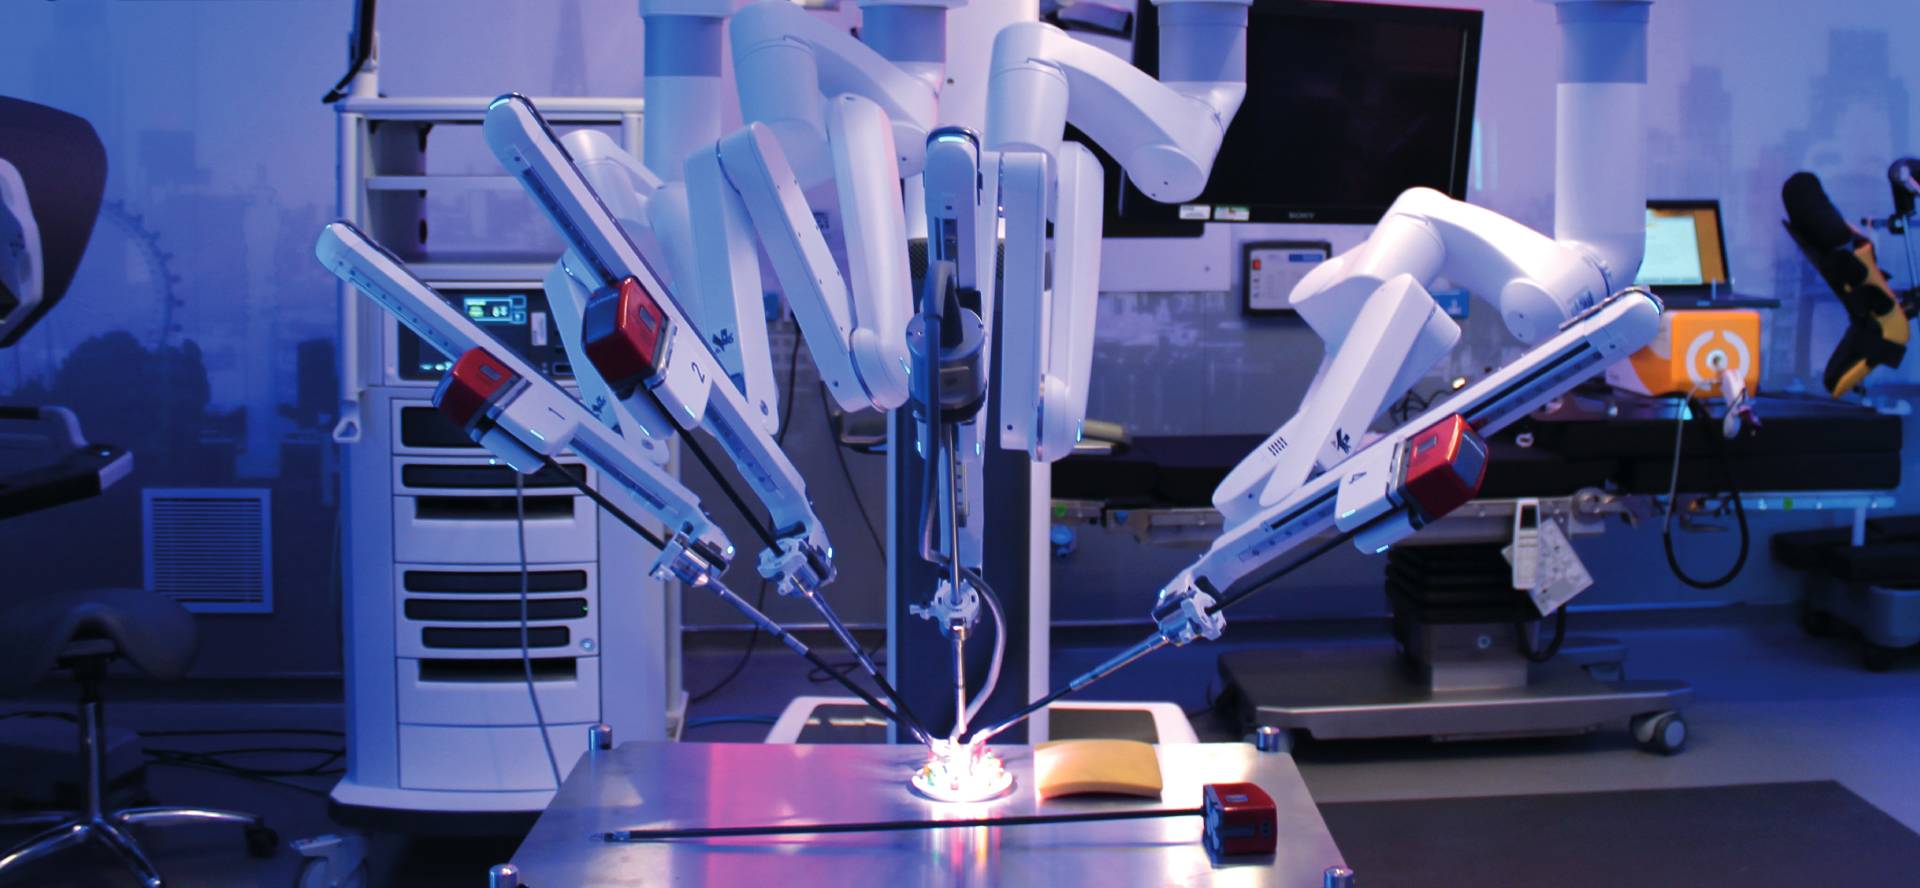 endnu engang overvældende ovn Private Robot Surgery | da Vinci surgery | London | Manchester | HCA UK